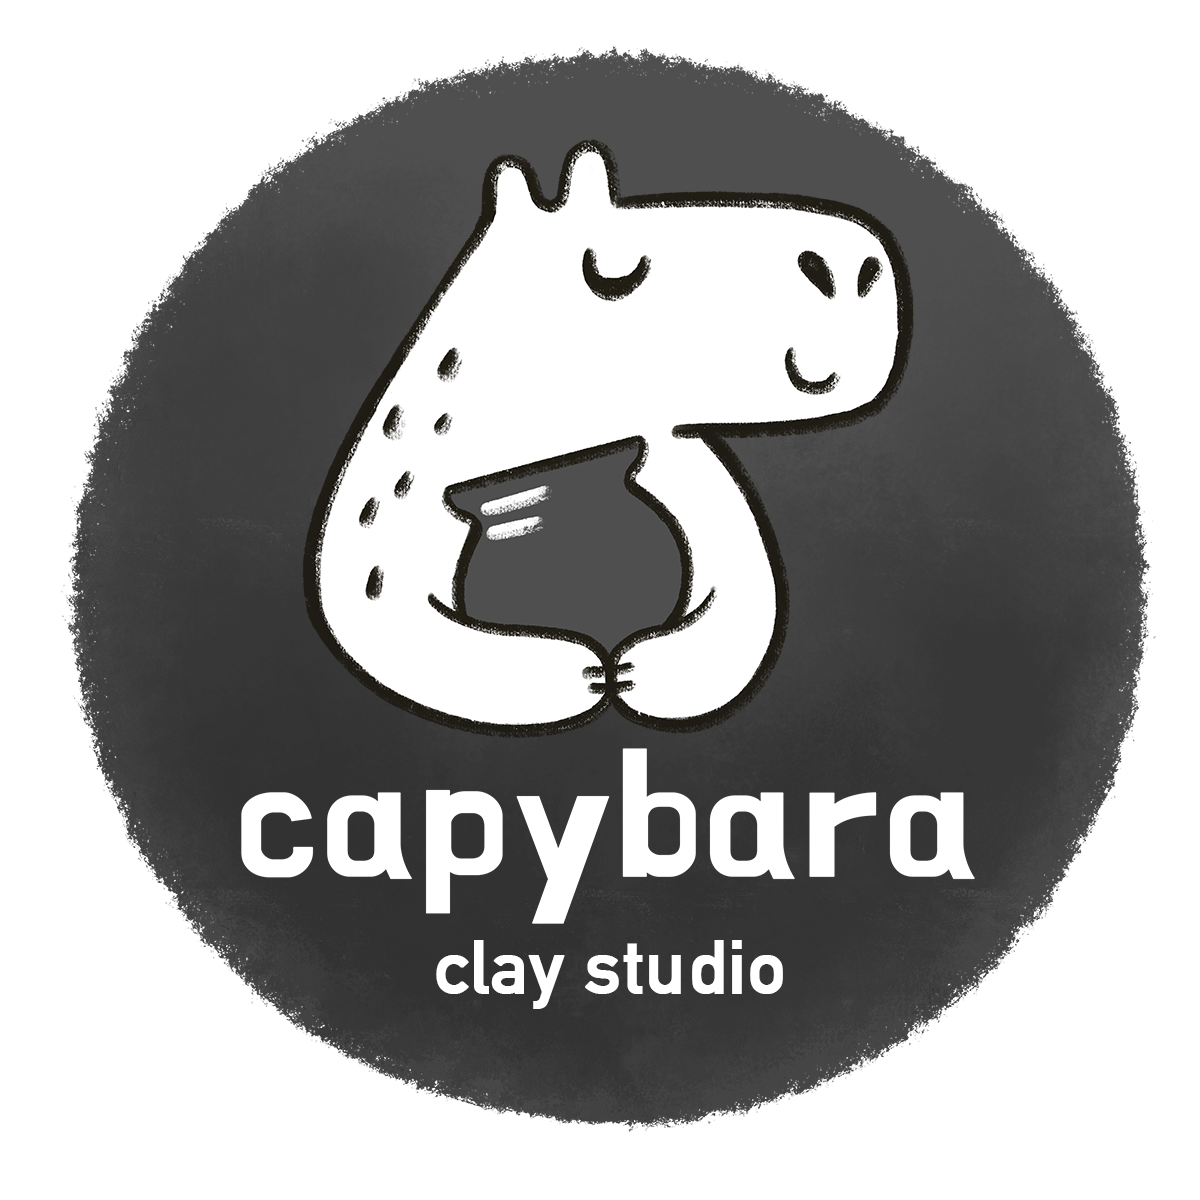 Capybara clay &amp; art studio